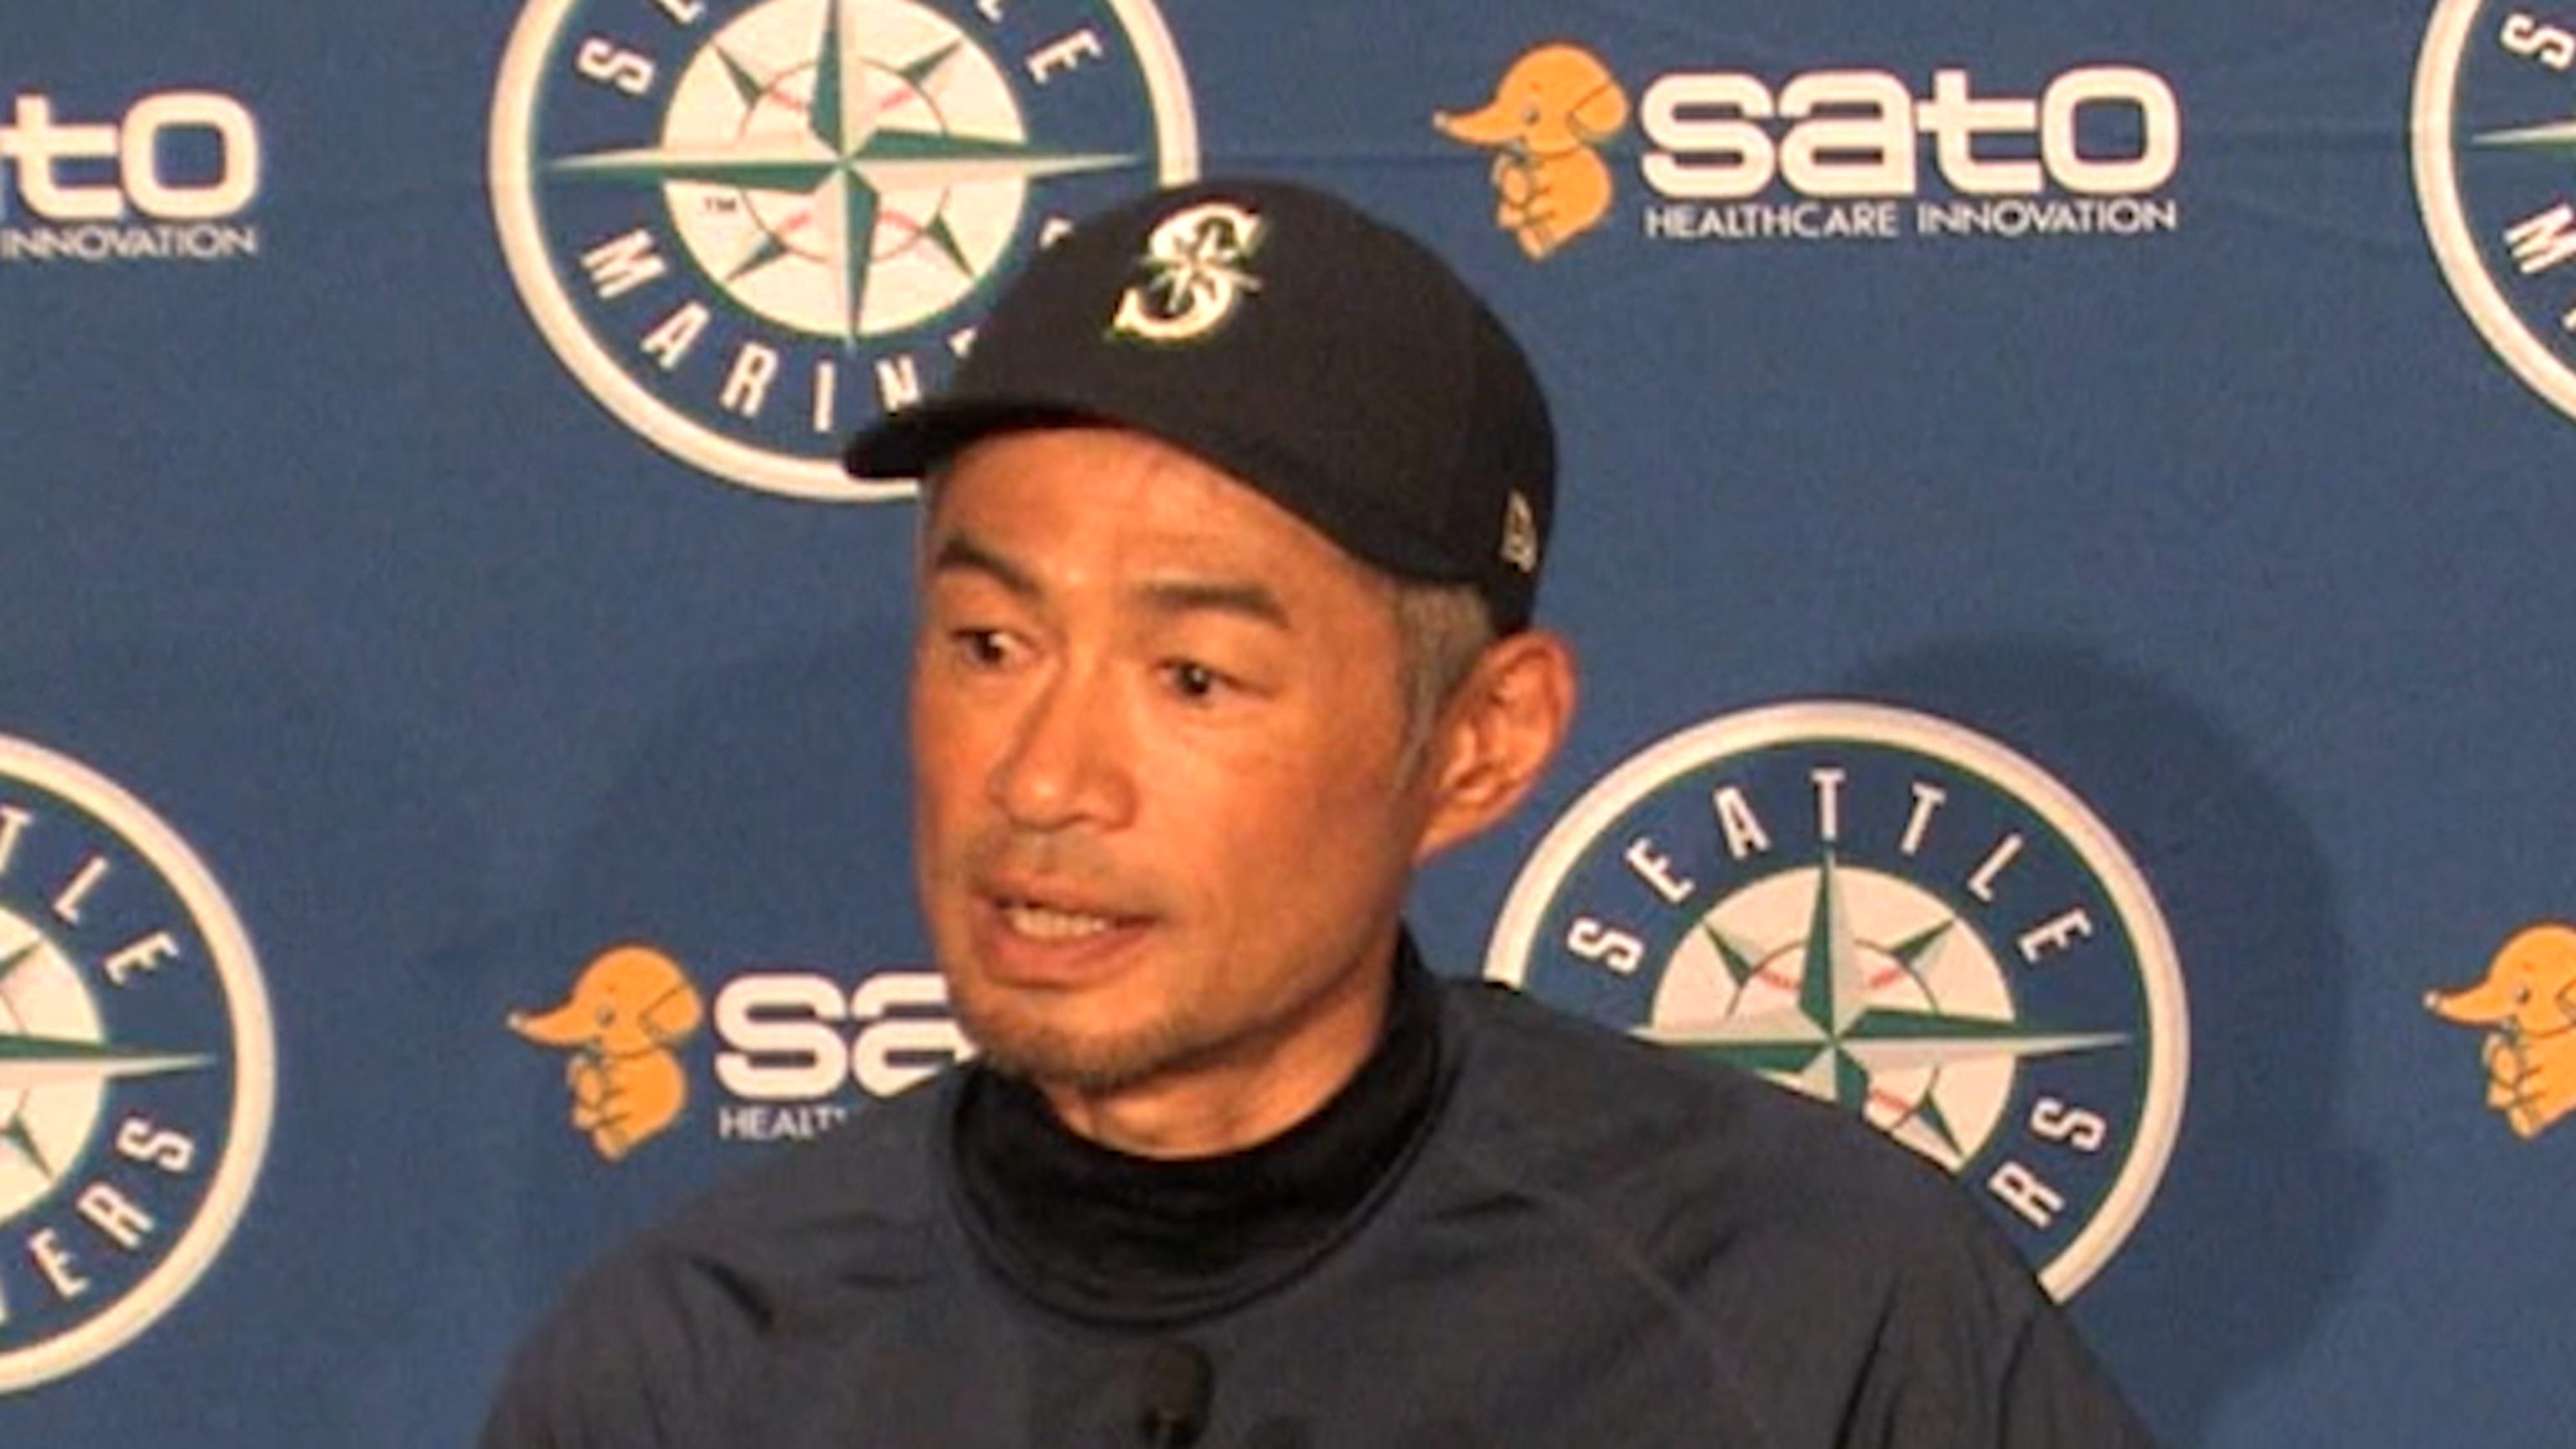 Ichiro Suzuki To Be Inducted Into Mariners Hall of Fame, by Mariners PR